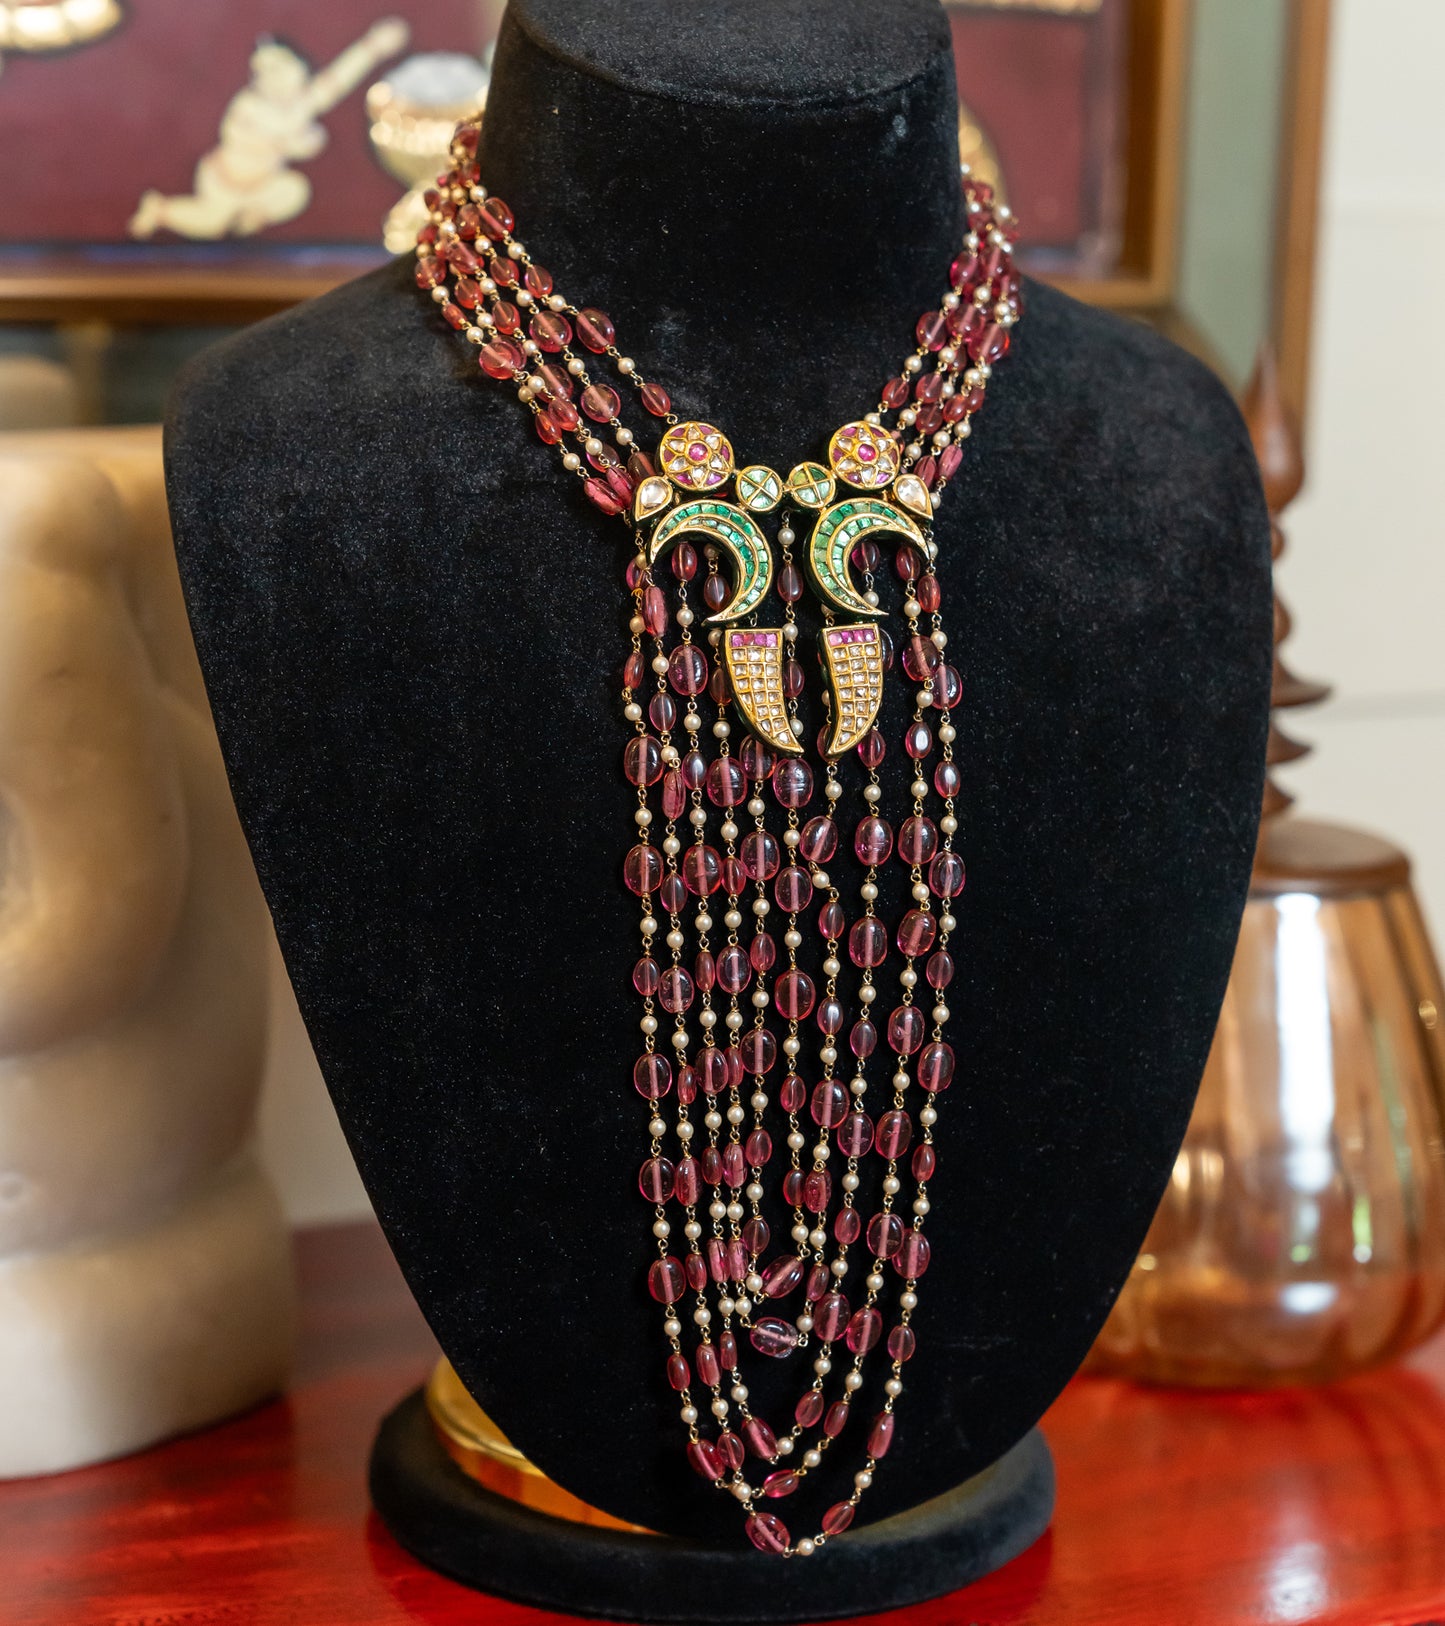 The Chloe Necklace in Gold-Festive Jewelry-Festive Jewelry